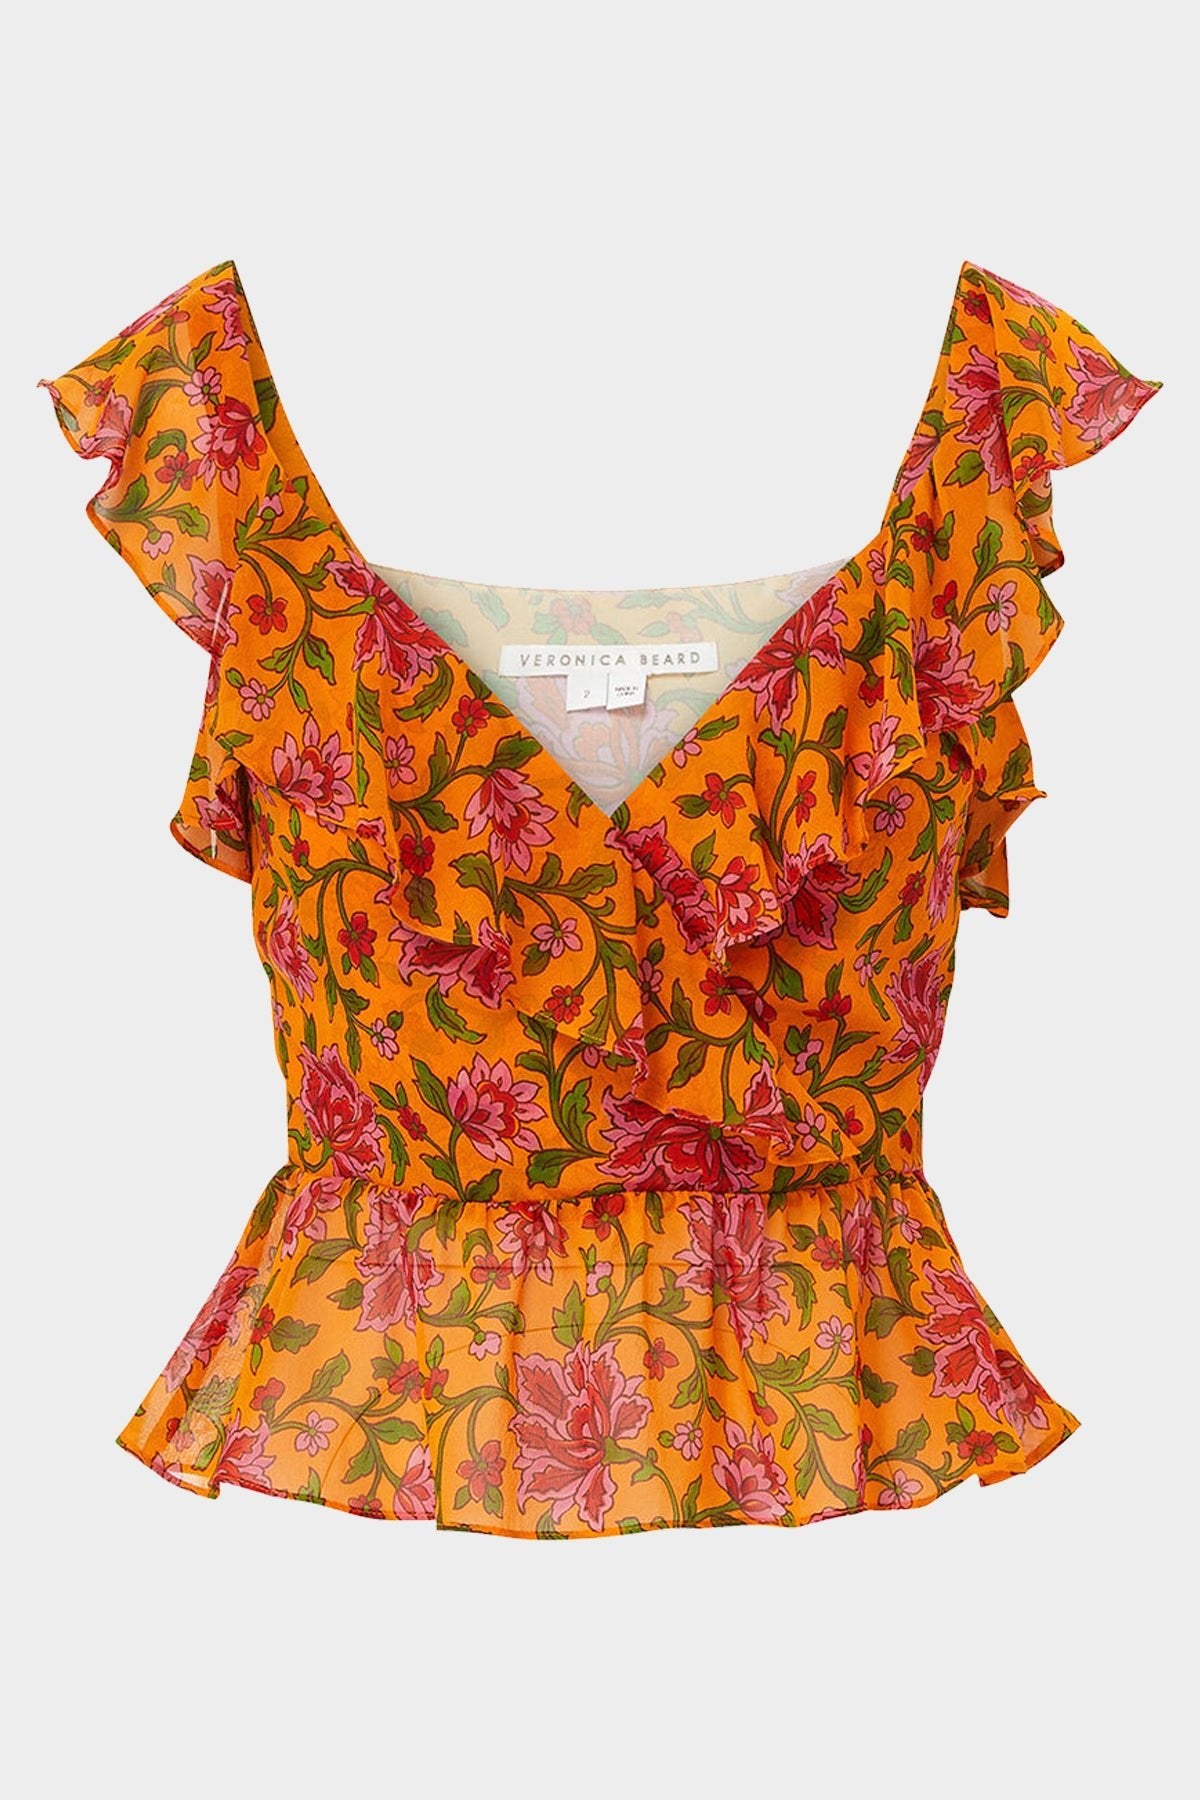 Randa Foral-Silk Top in Hot Orange Multi - shop-olivia.com